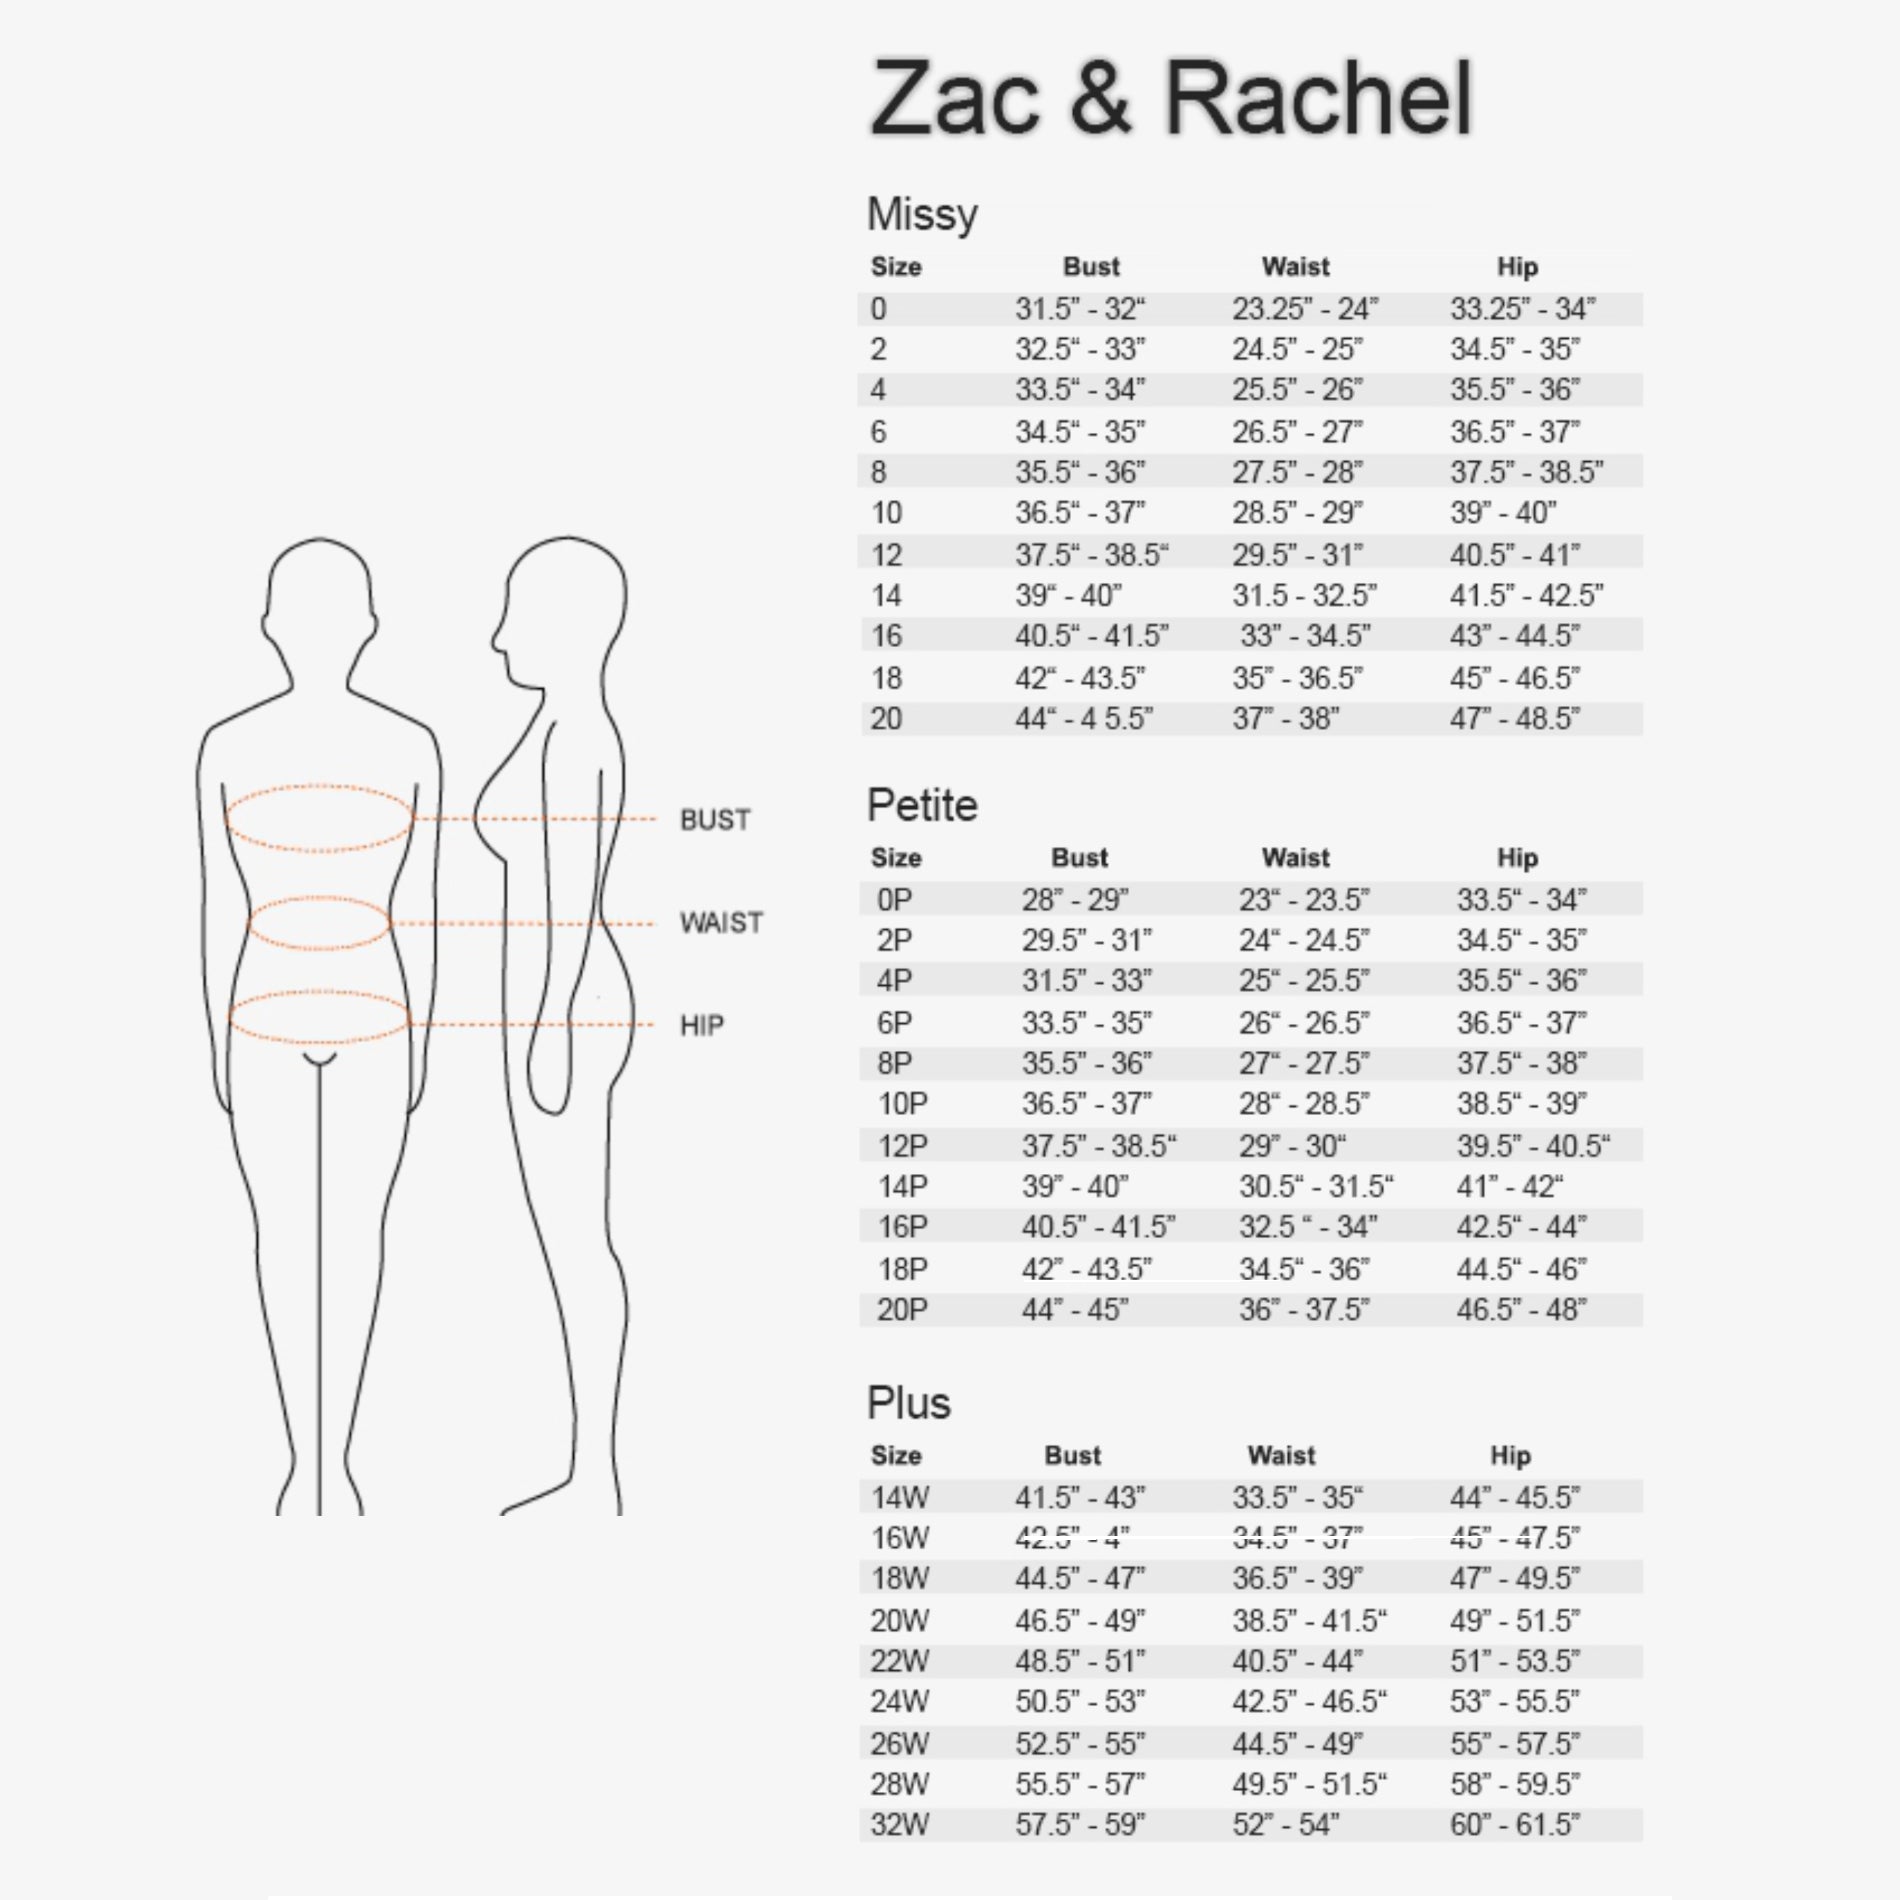 Zac & Rachel Pockets Capri Pants for Women